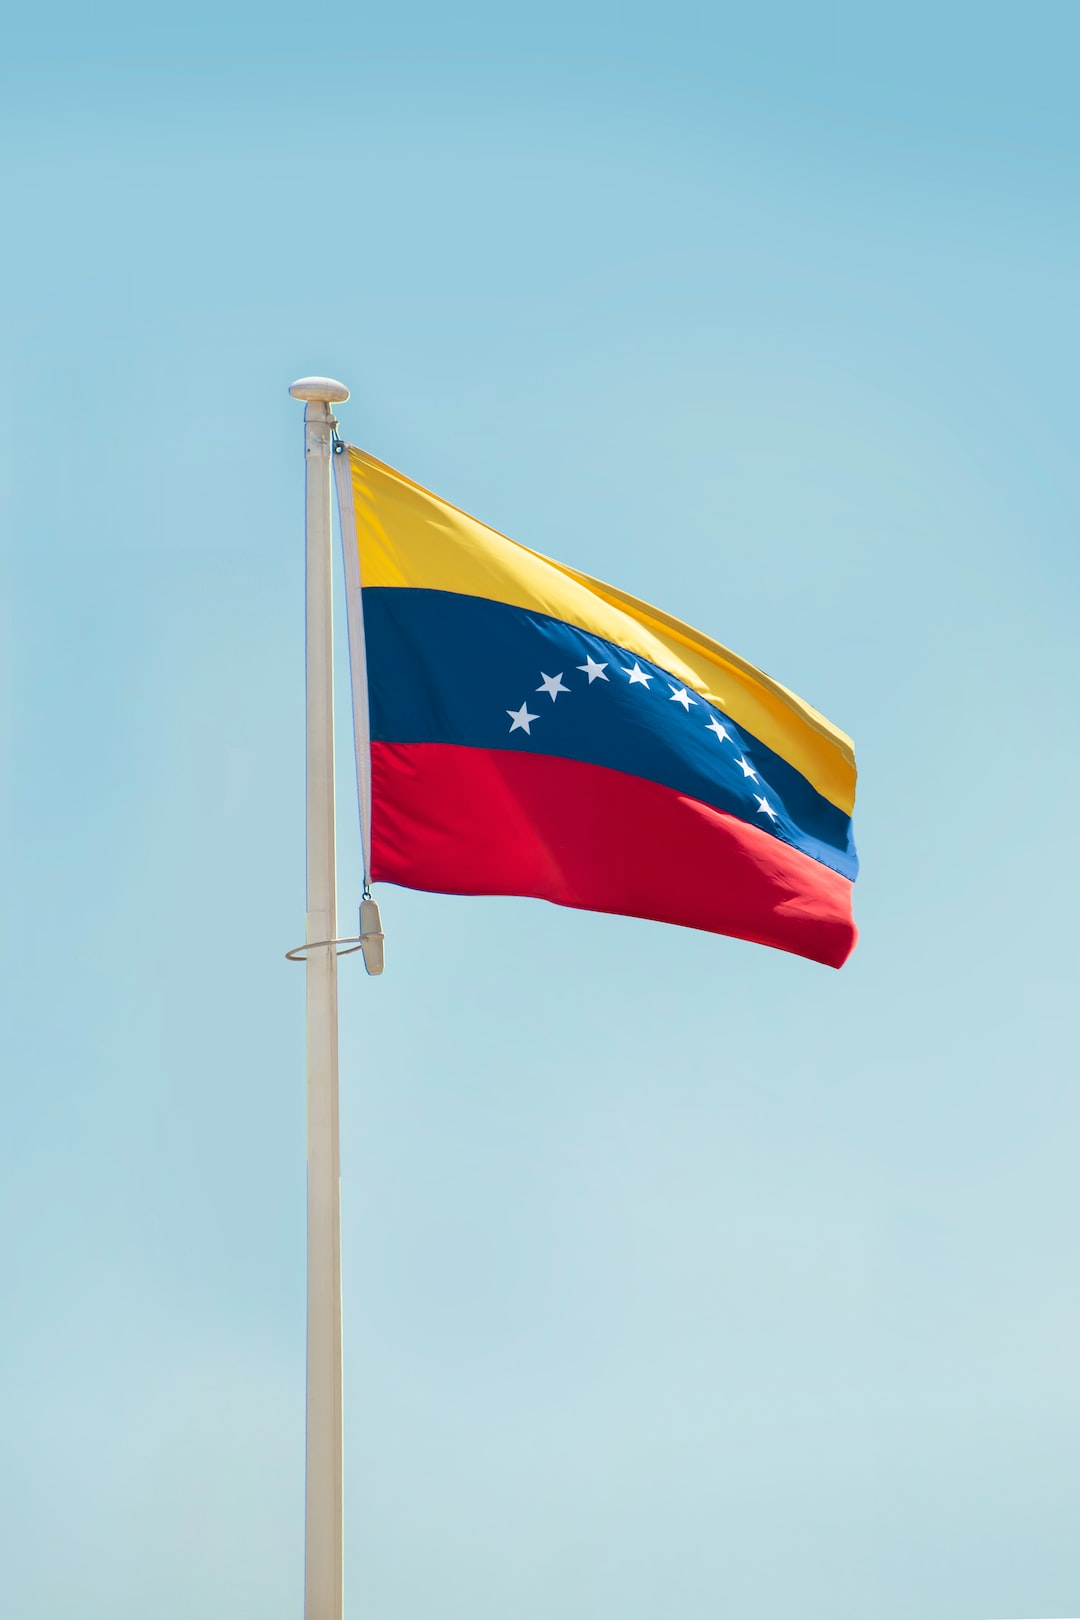 Venezuela National flag